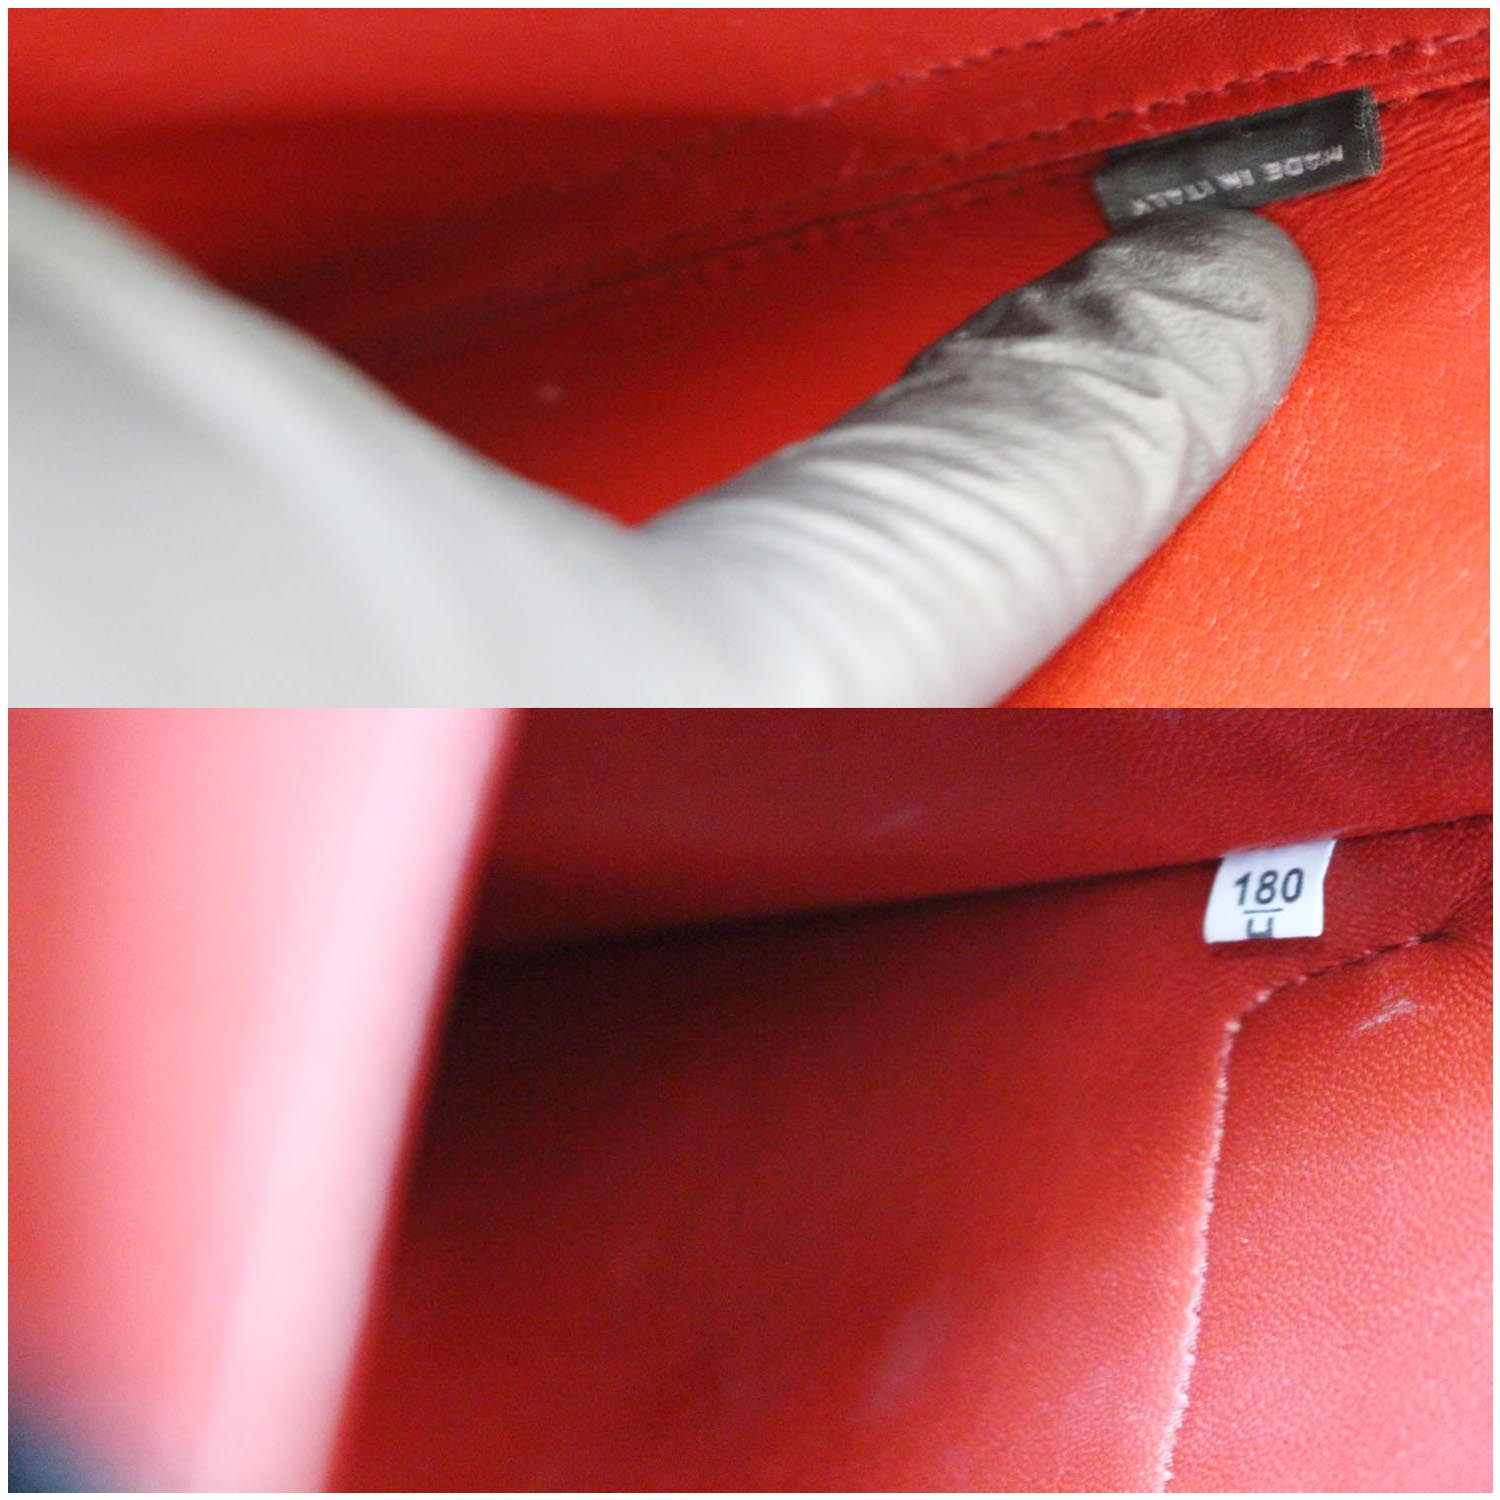 Prada Grey/Brown Saffiano Leather Double Handle Tote Bag 1BG838